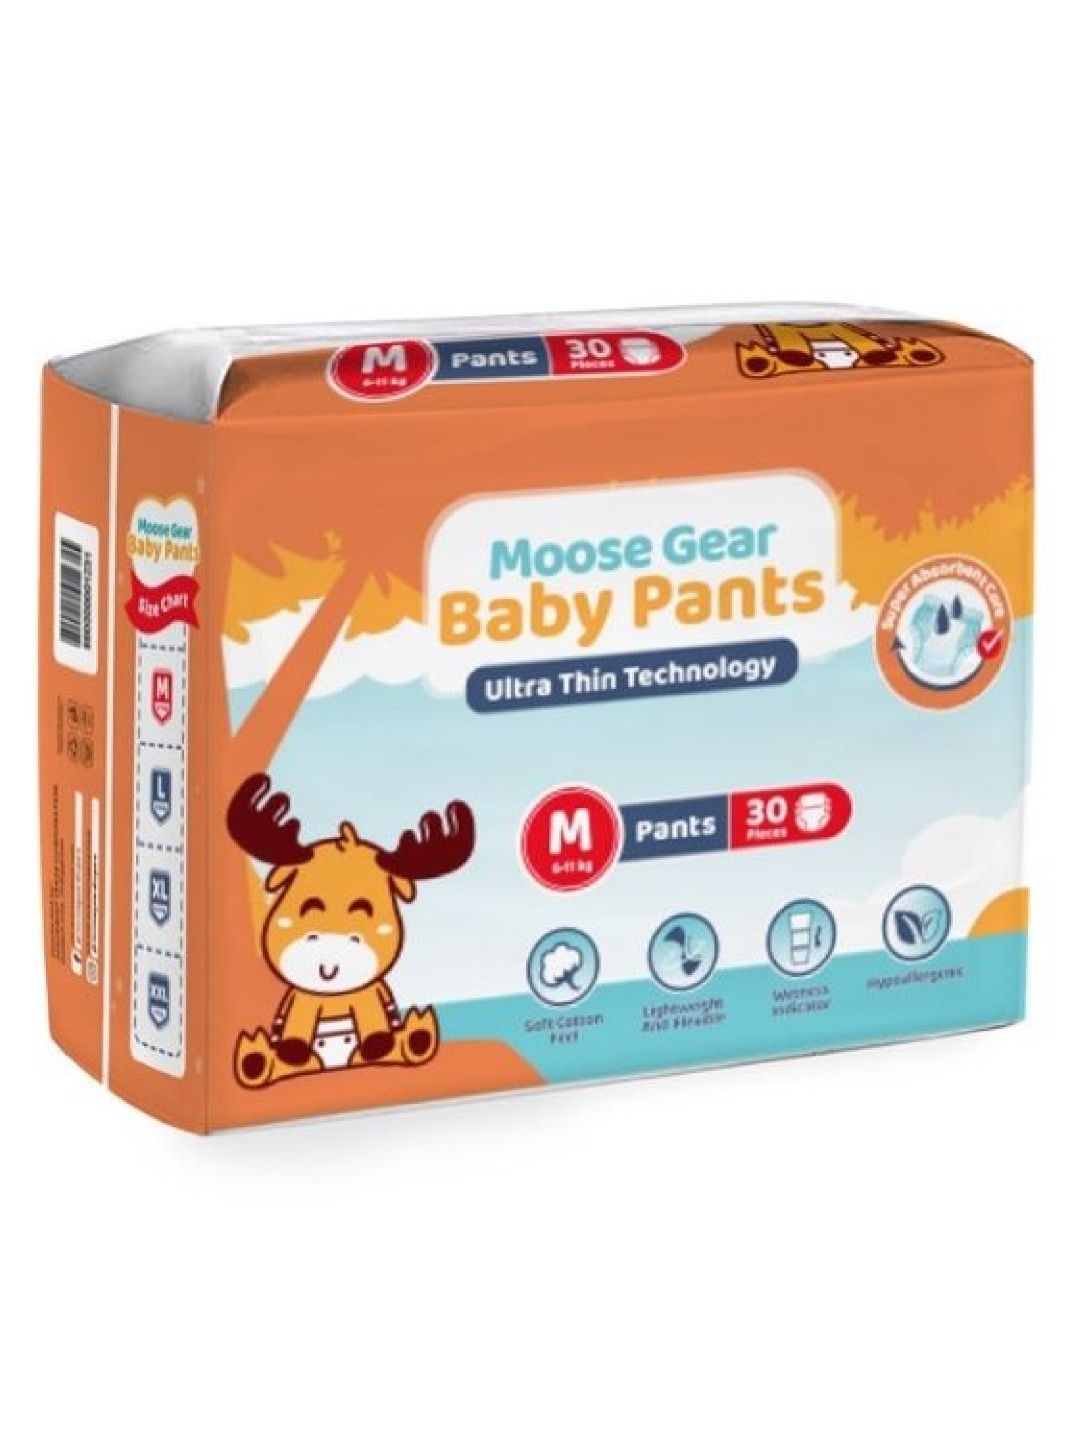 Moose Gear Baby Pants Diapers Medium (30 pcs)